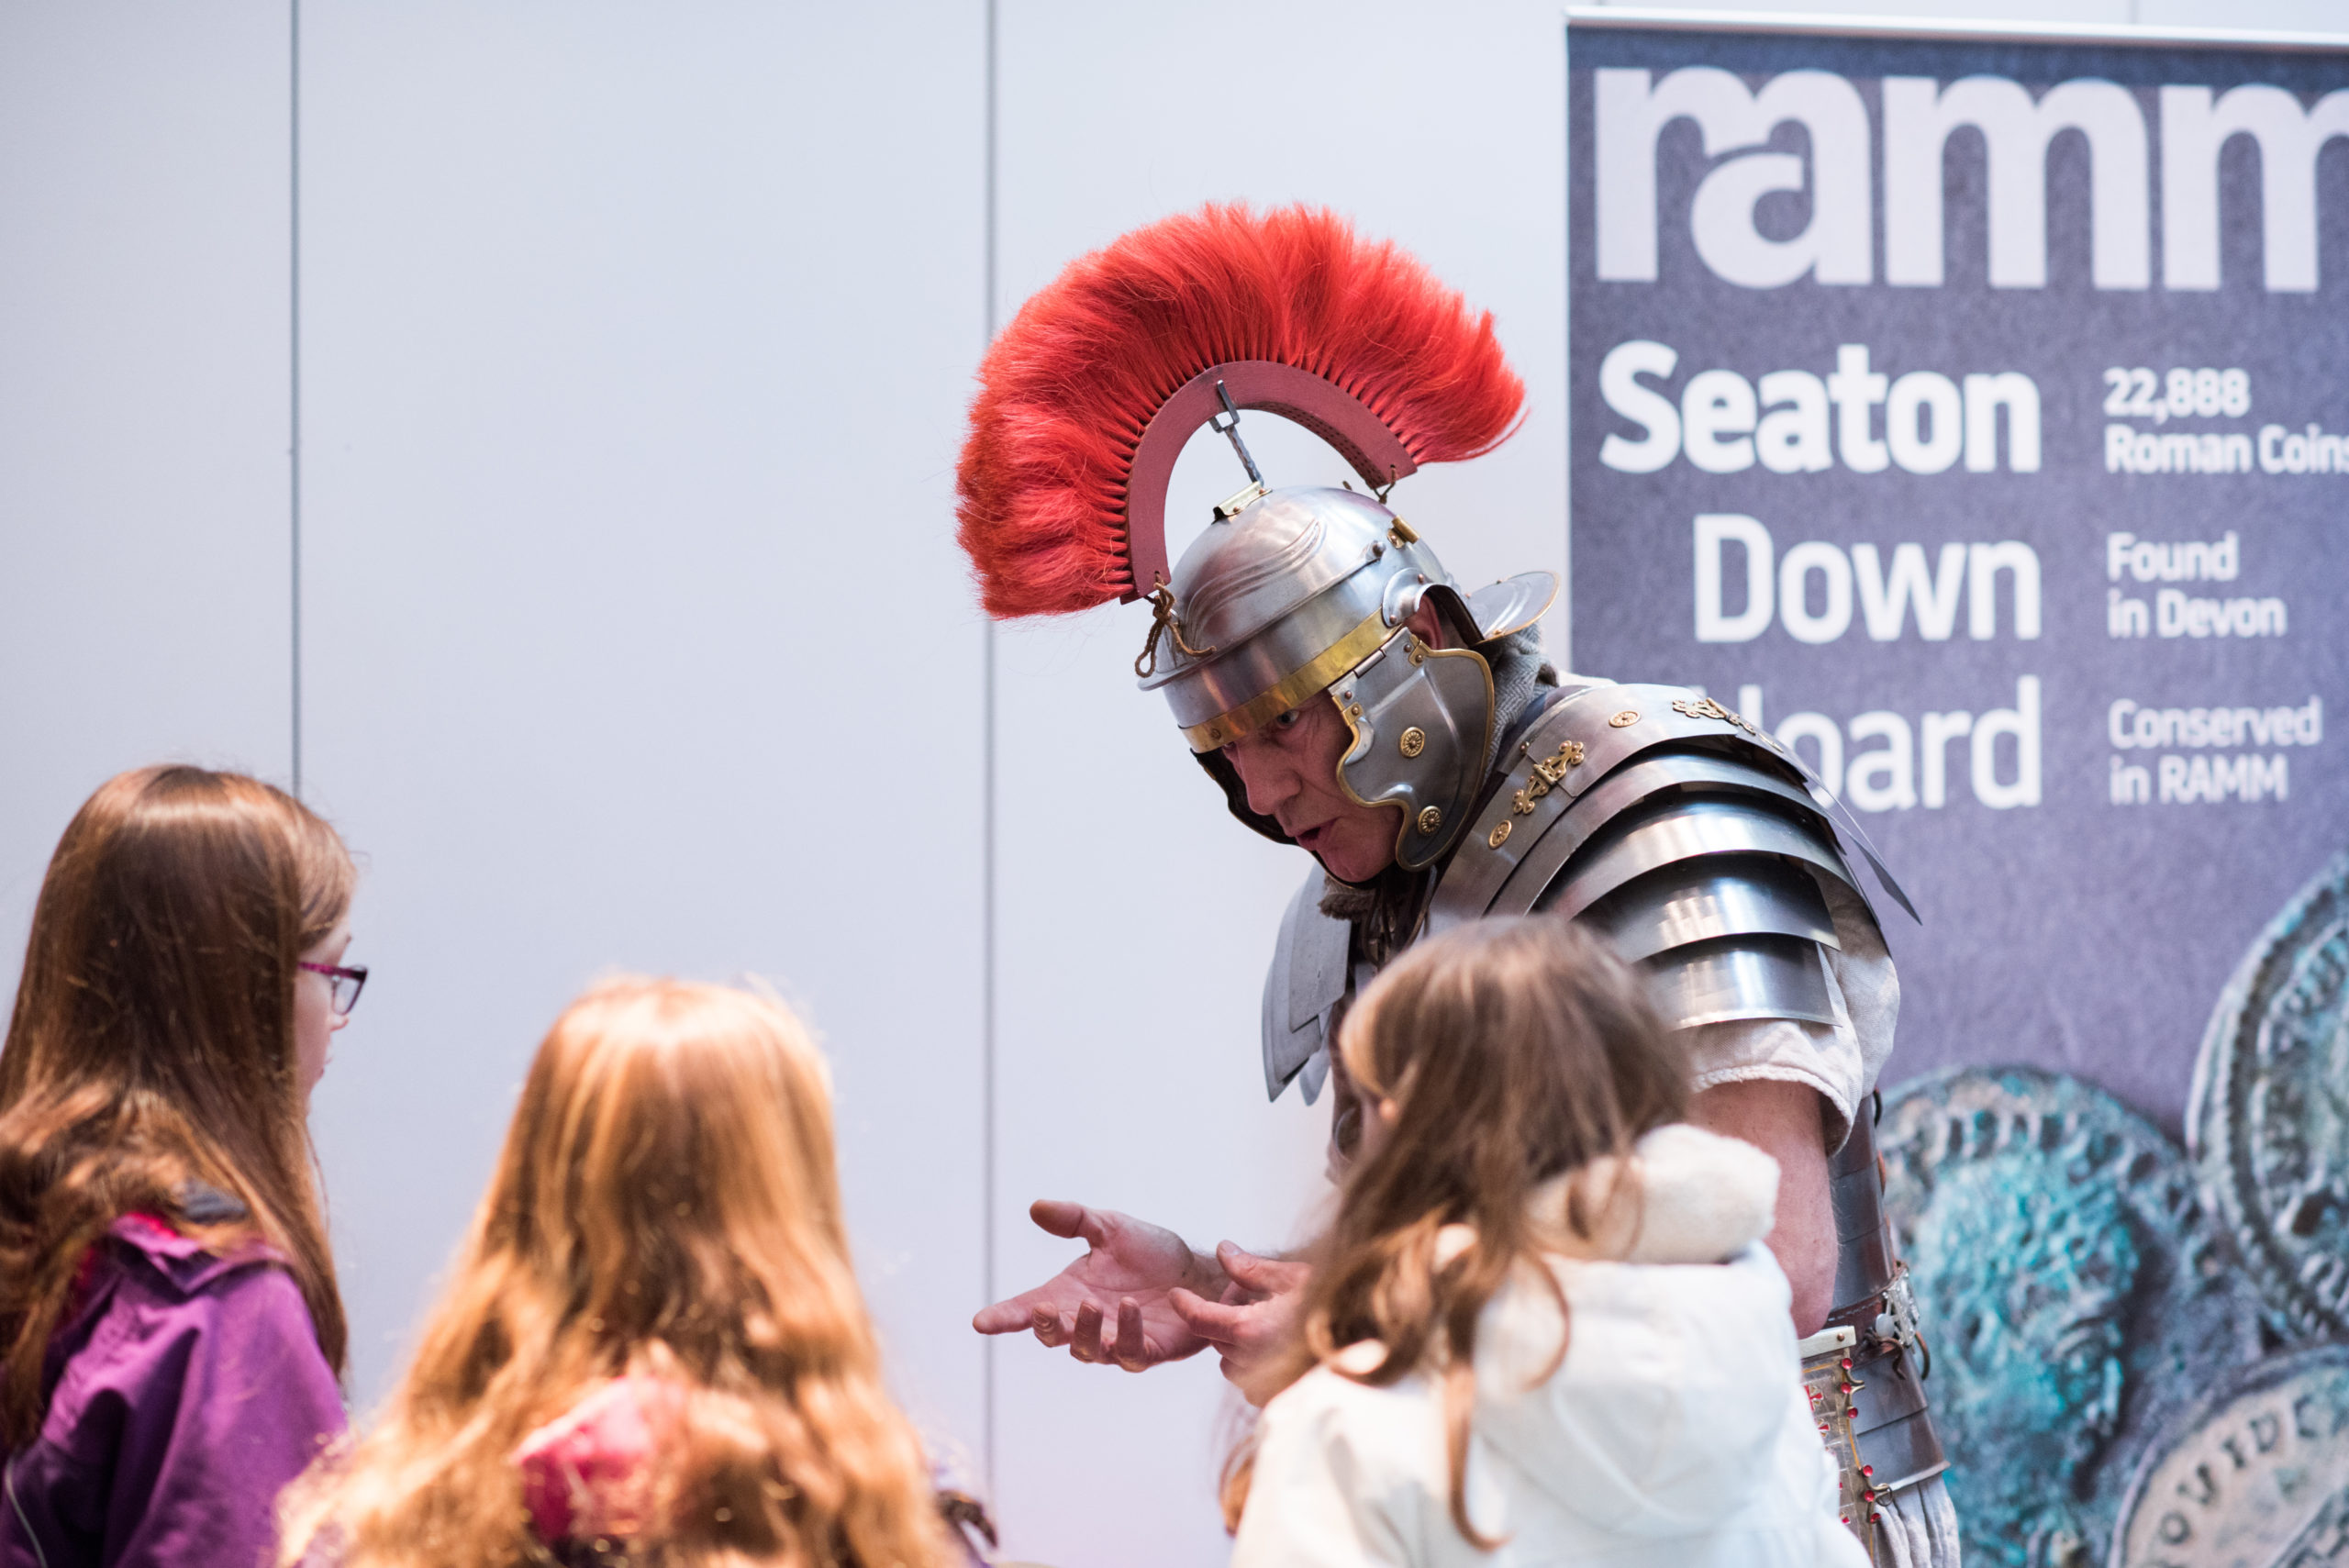 An actor dressed as a Roman Centurion speaks to school children